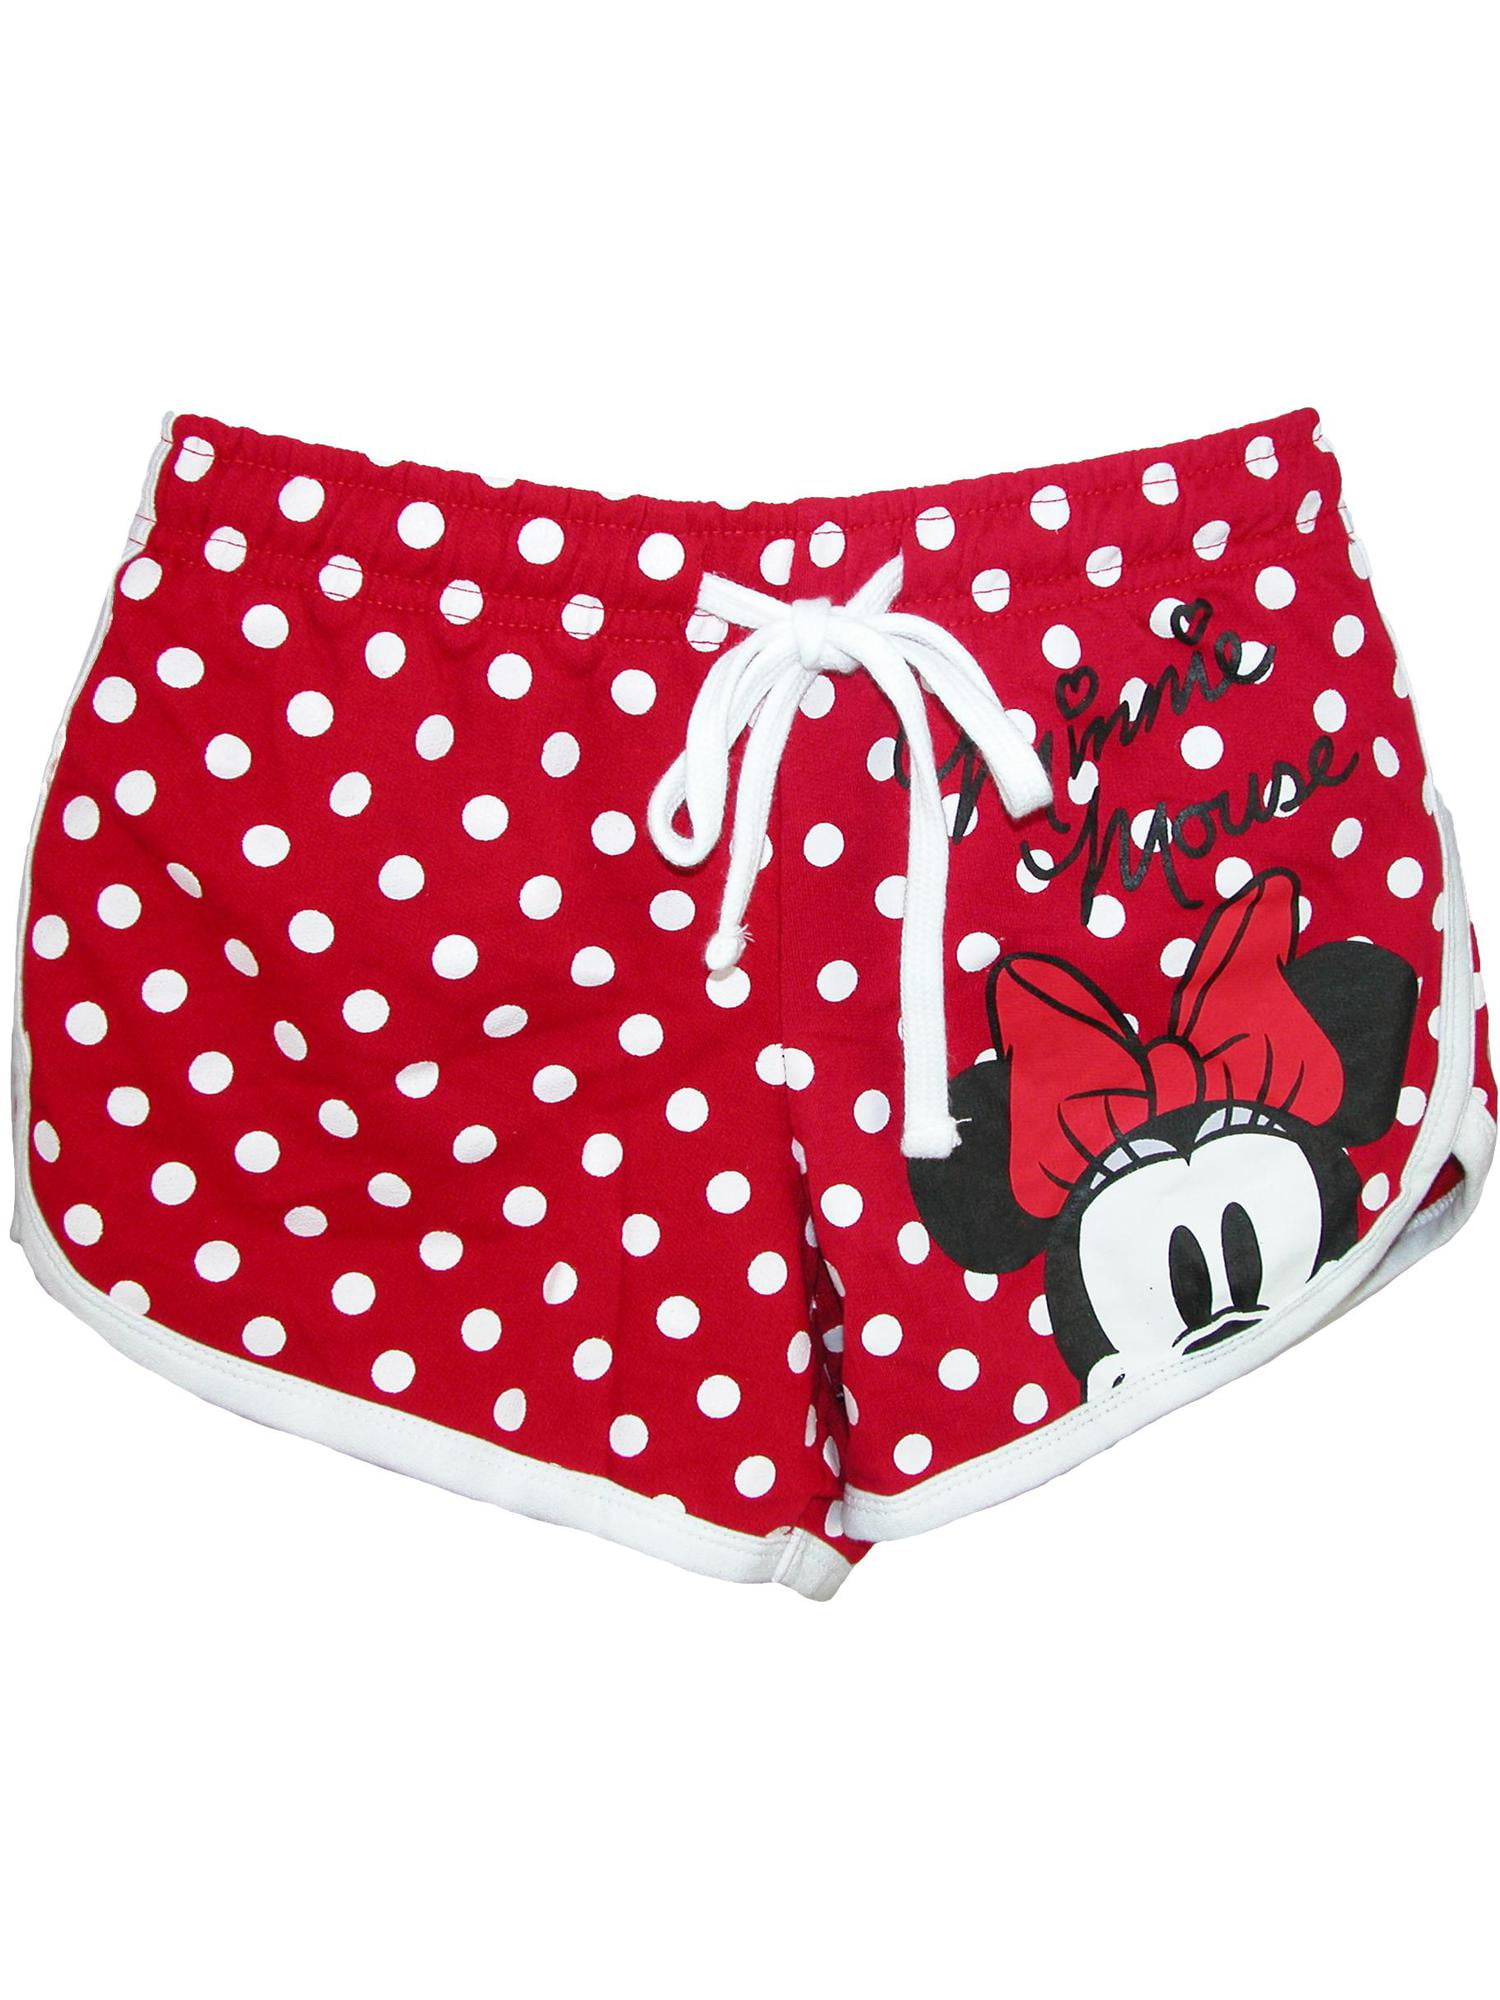 Minnie Mouse Polka Dot Red Leggings Women's Plus Size Pants Disney